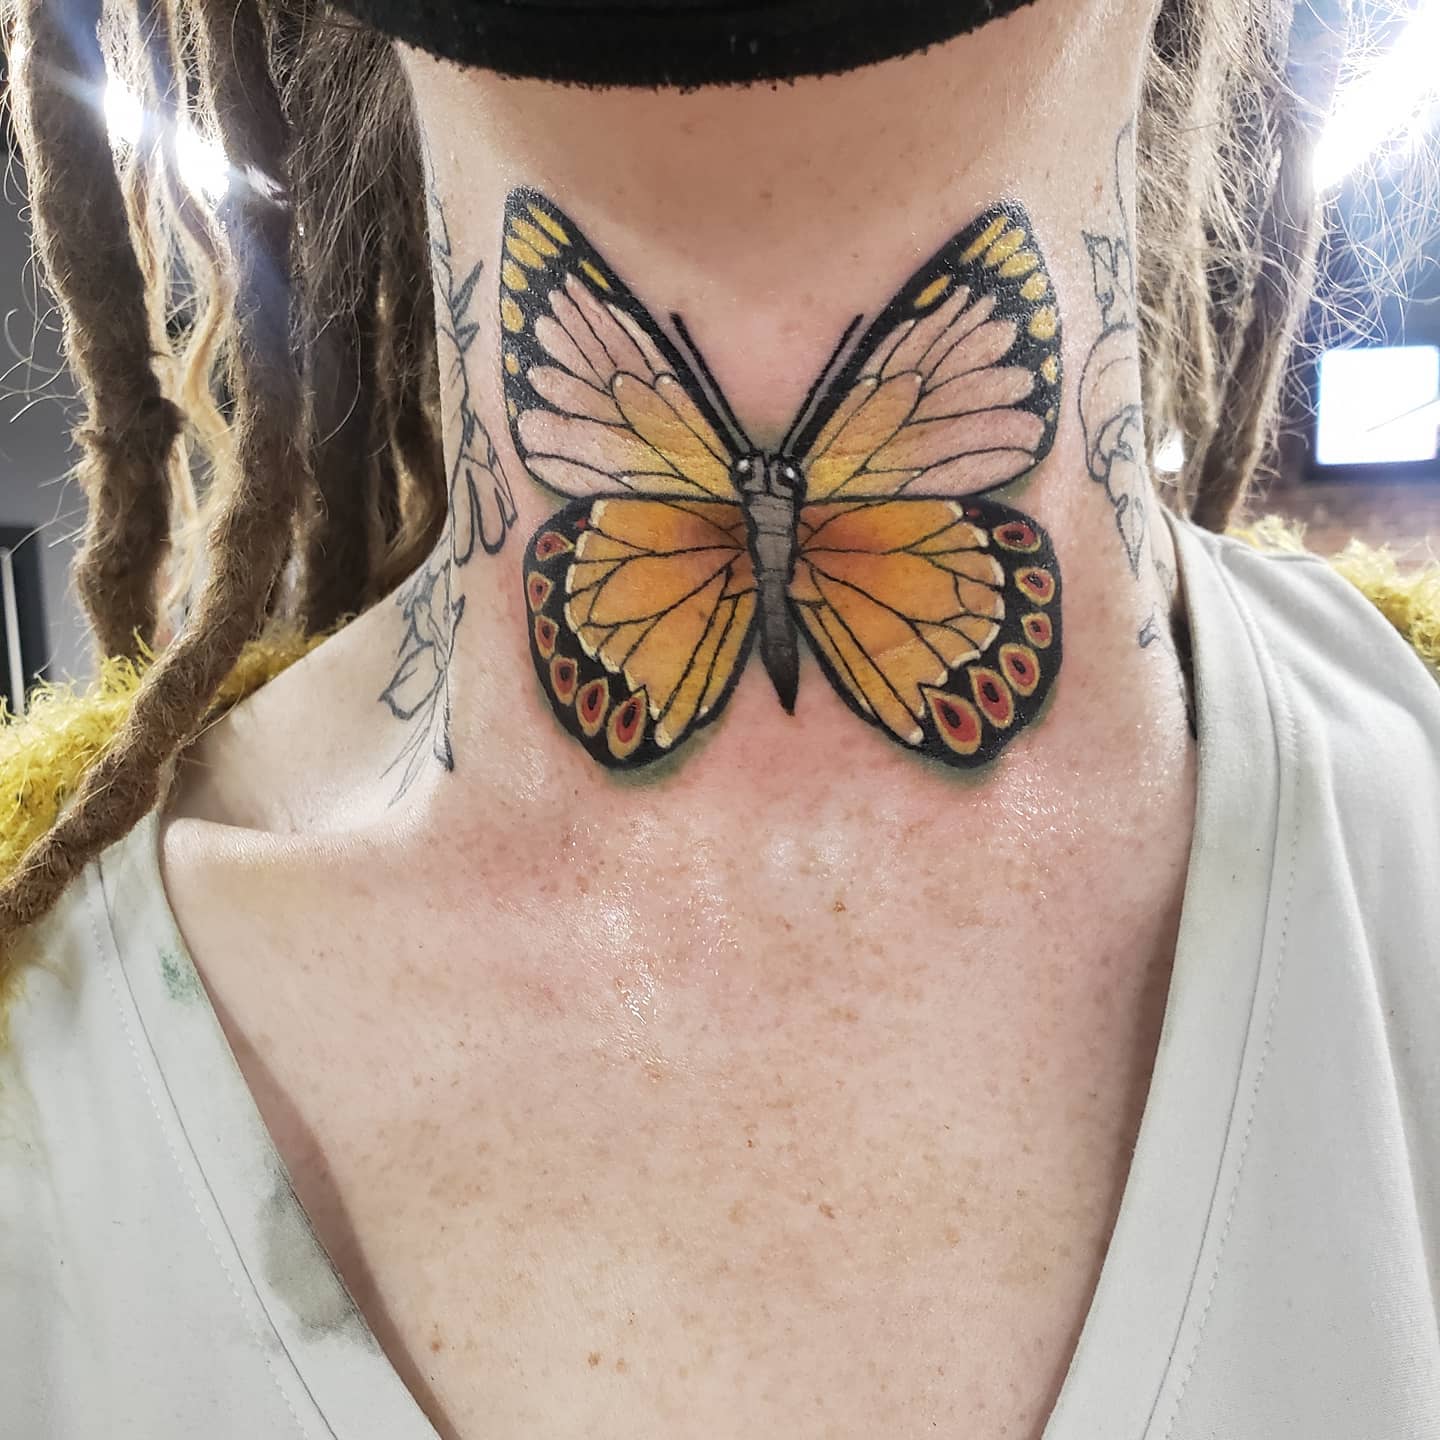 Monrach front butterfly neck tattoo